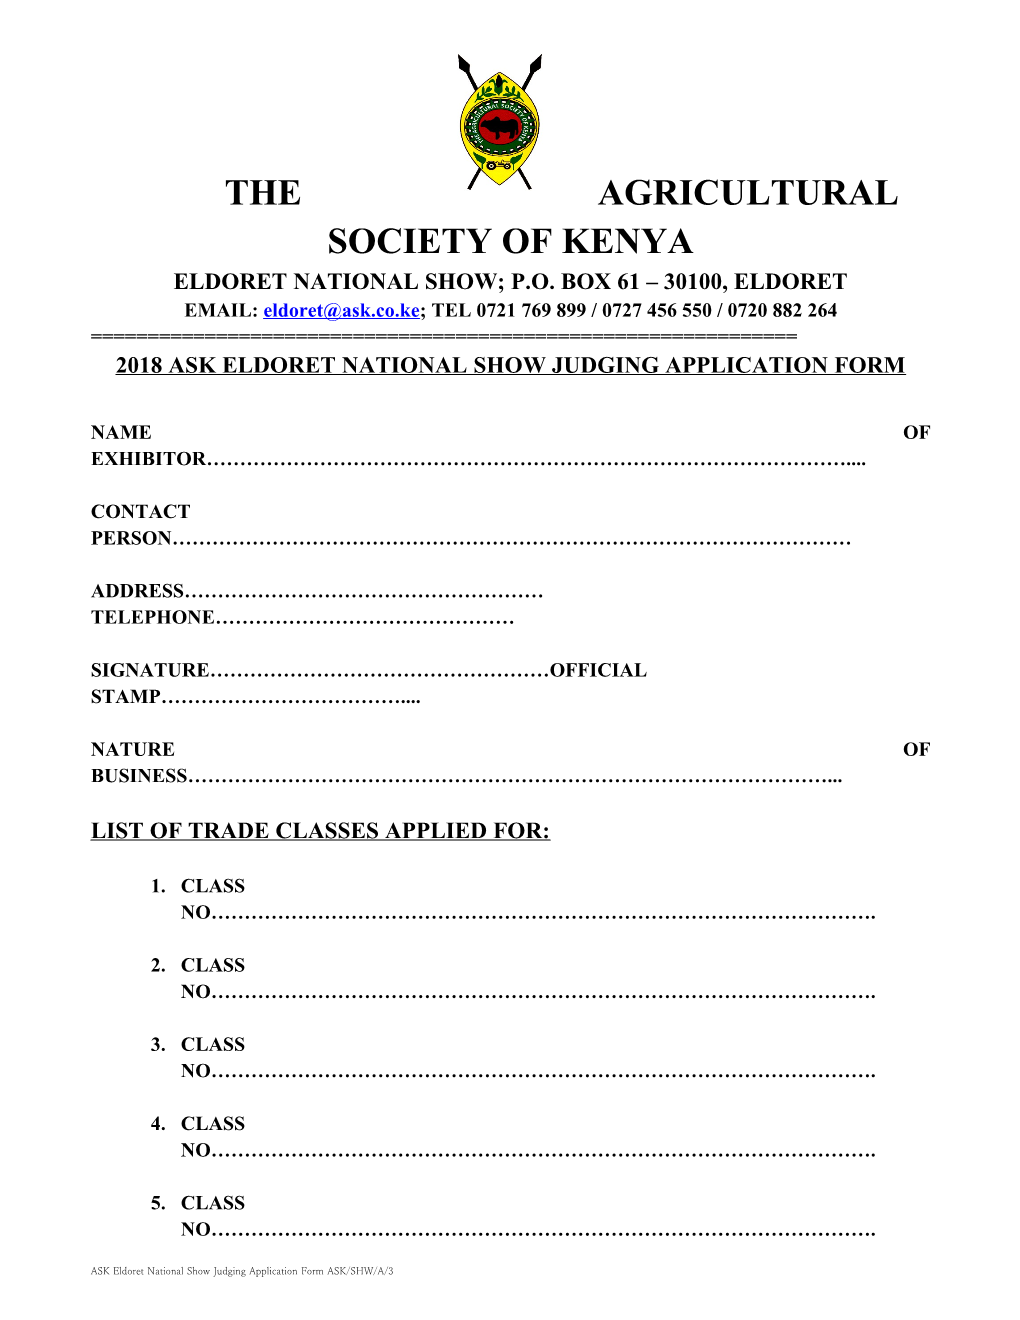 The Agricultural Society of Kenya